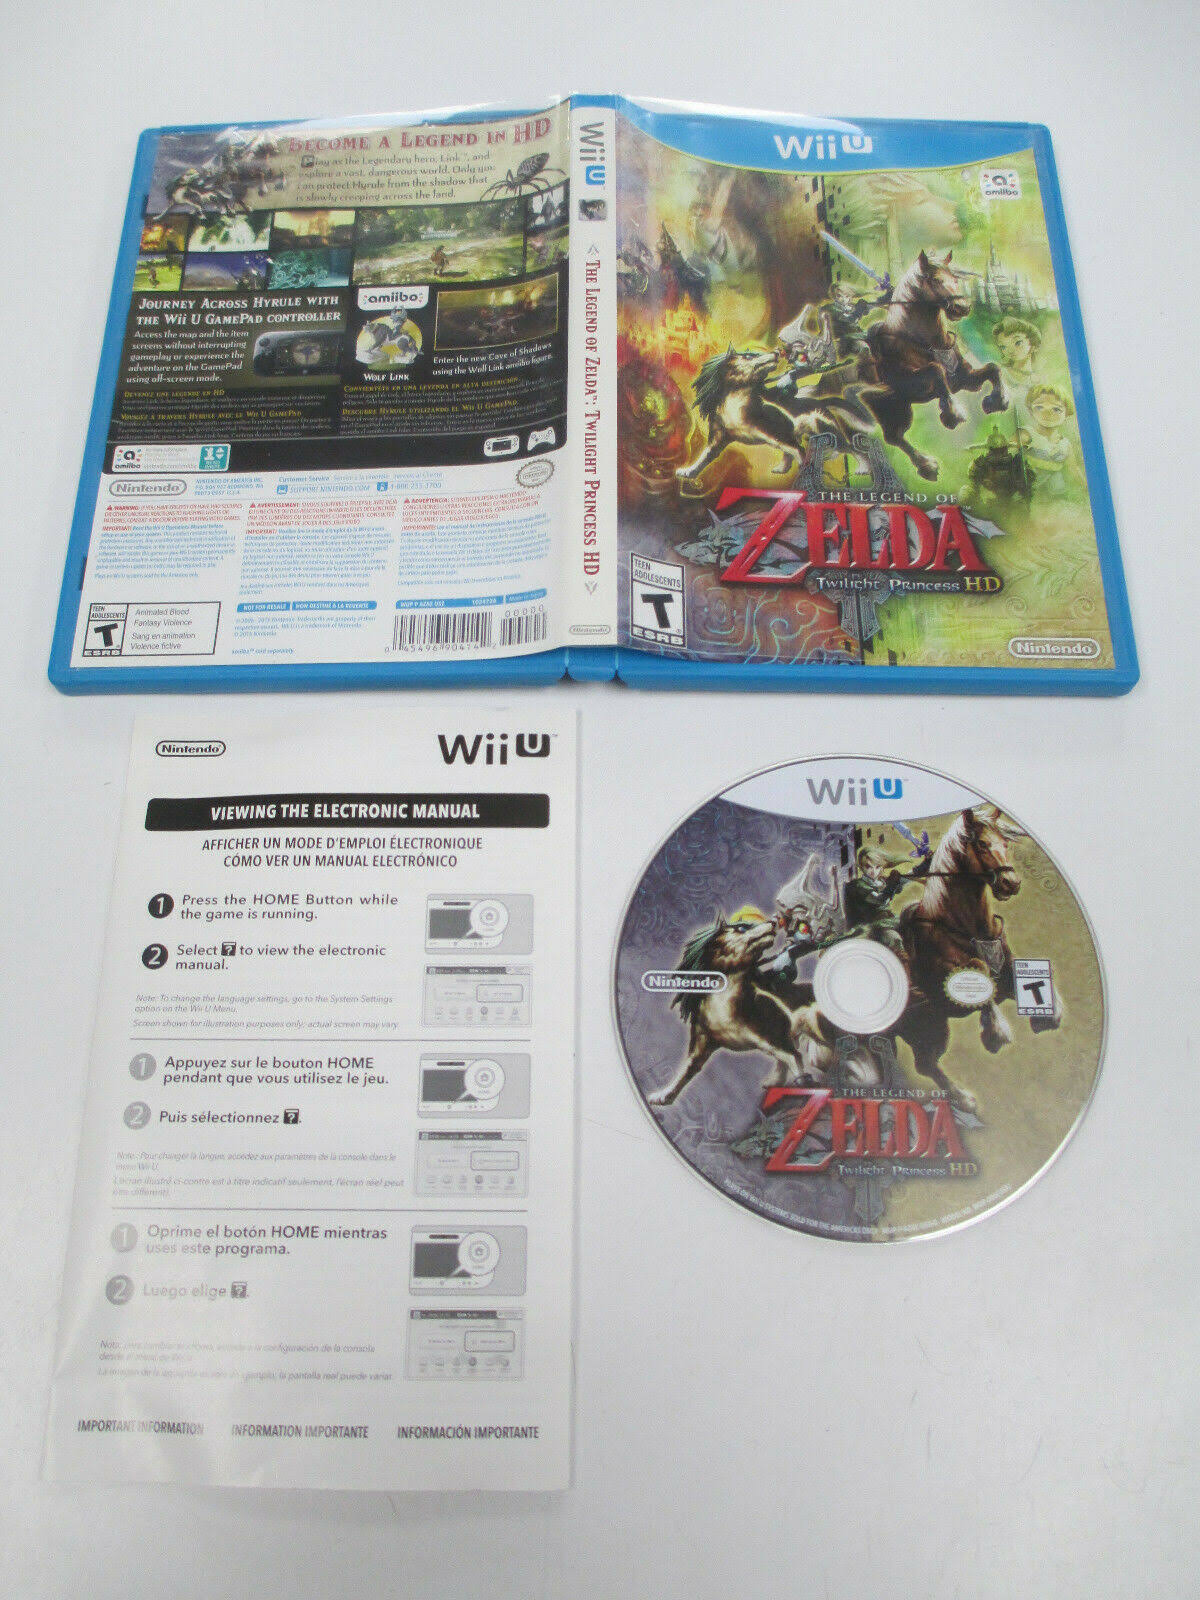 The Legend of Zelda: Twilight Princess HD Video game